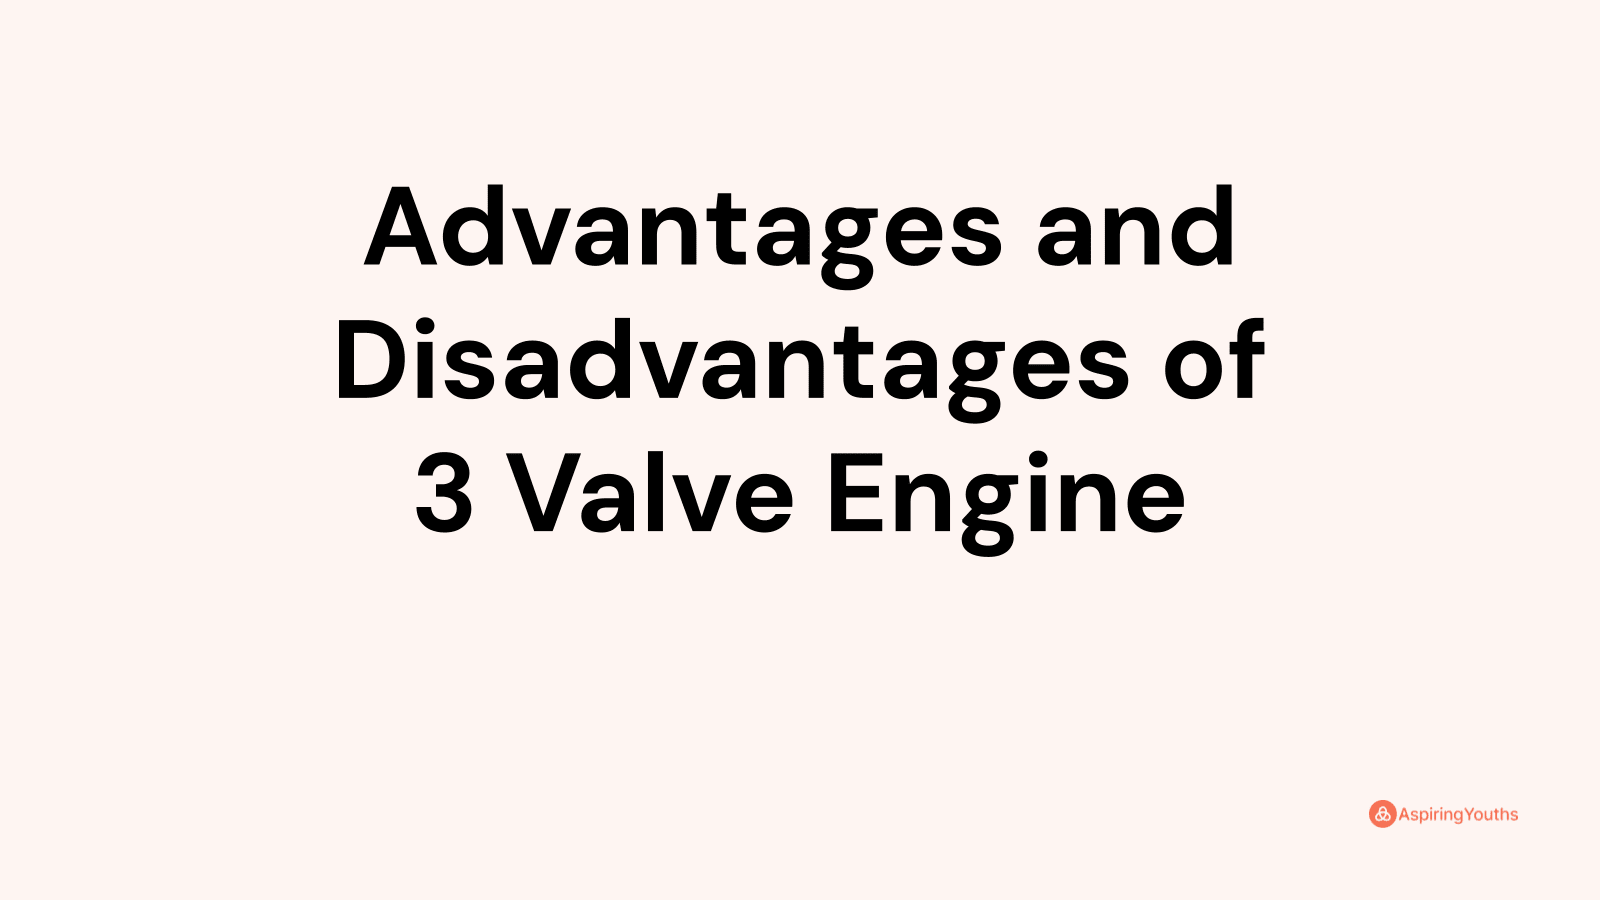 Advantages and disadvantages of 3 Valve Engine